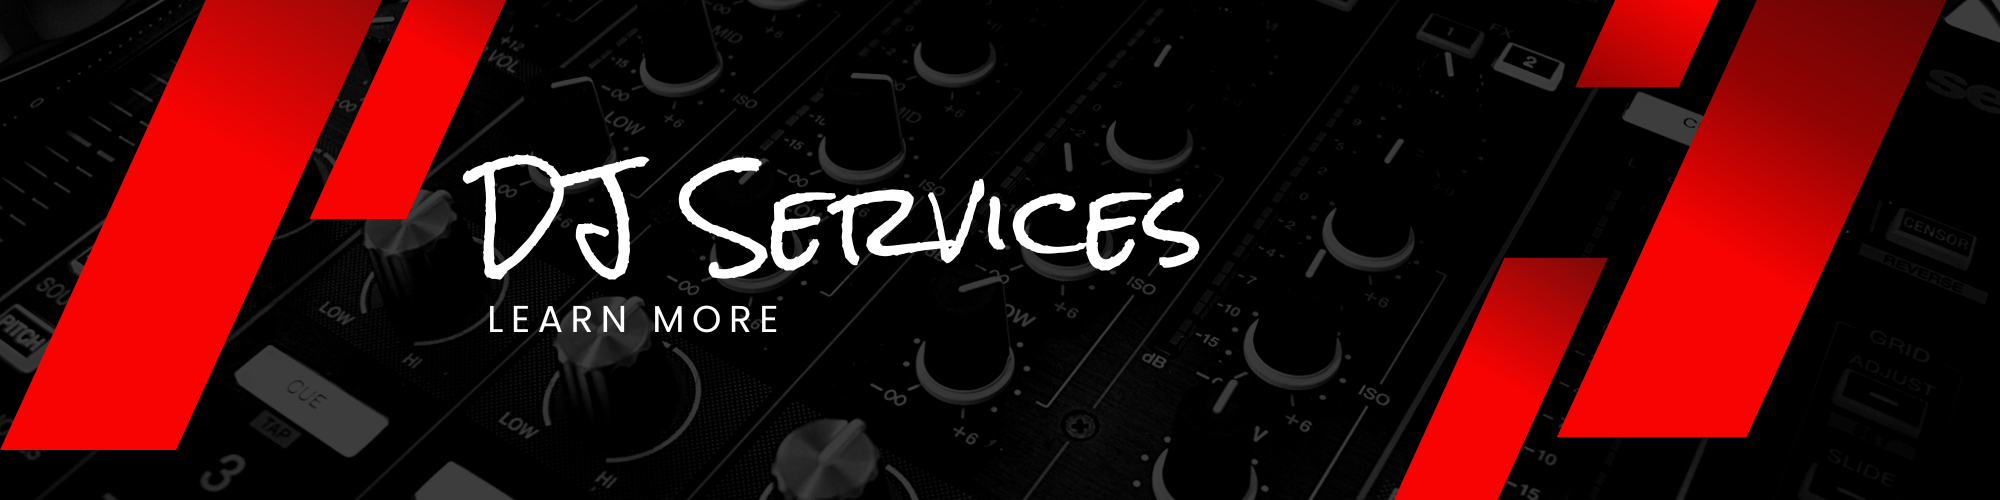 jonesboro, AR DJ services